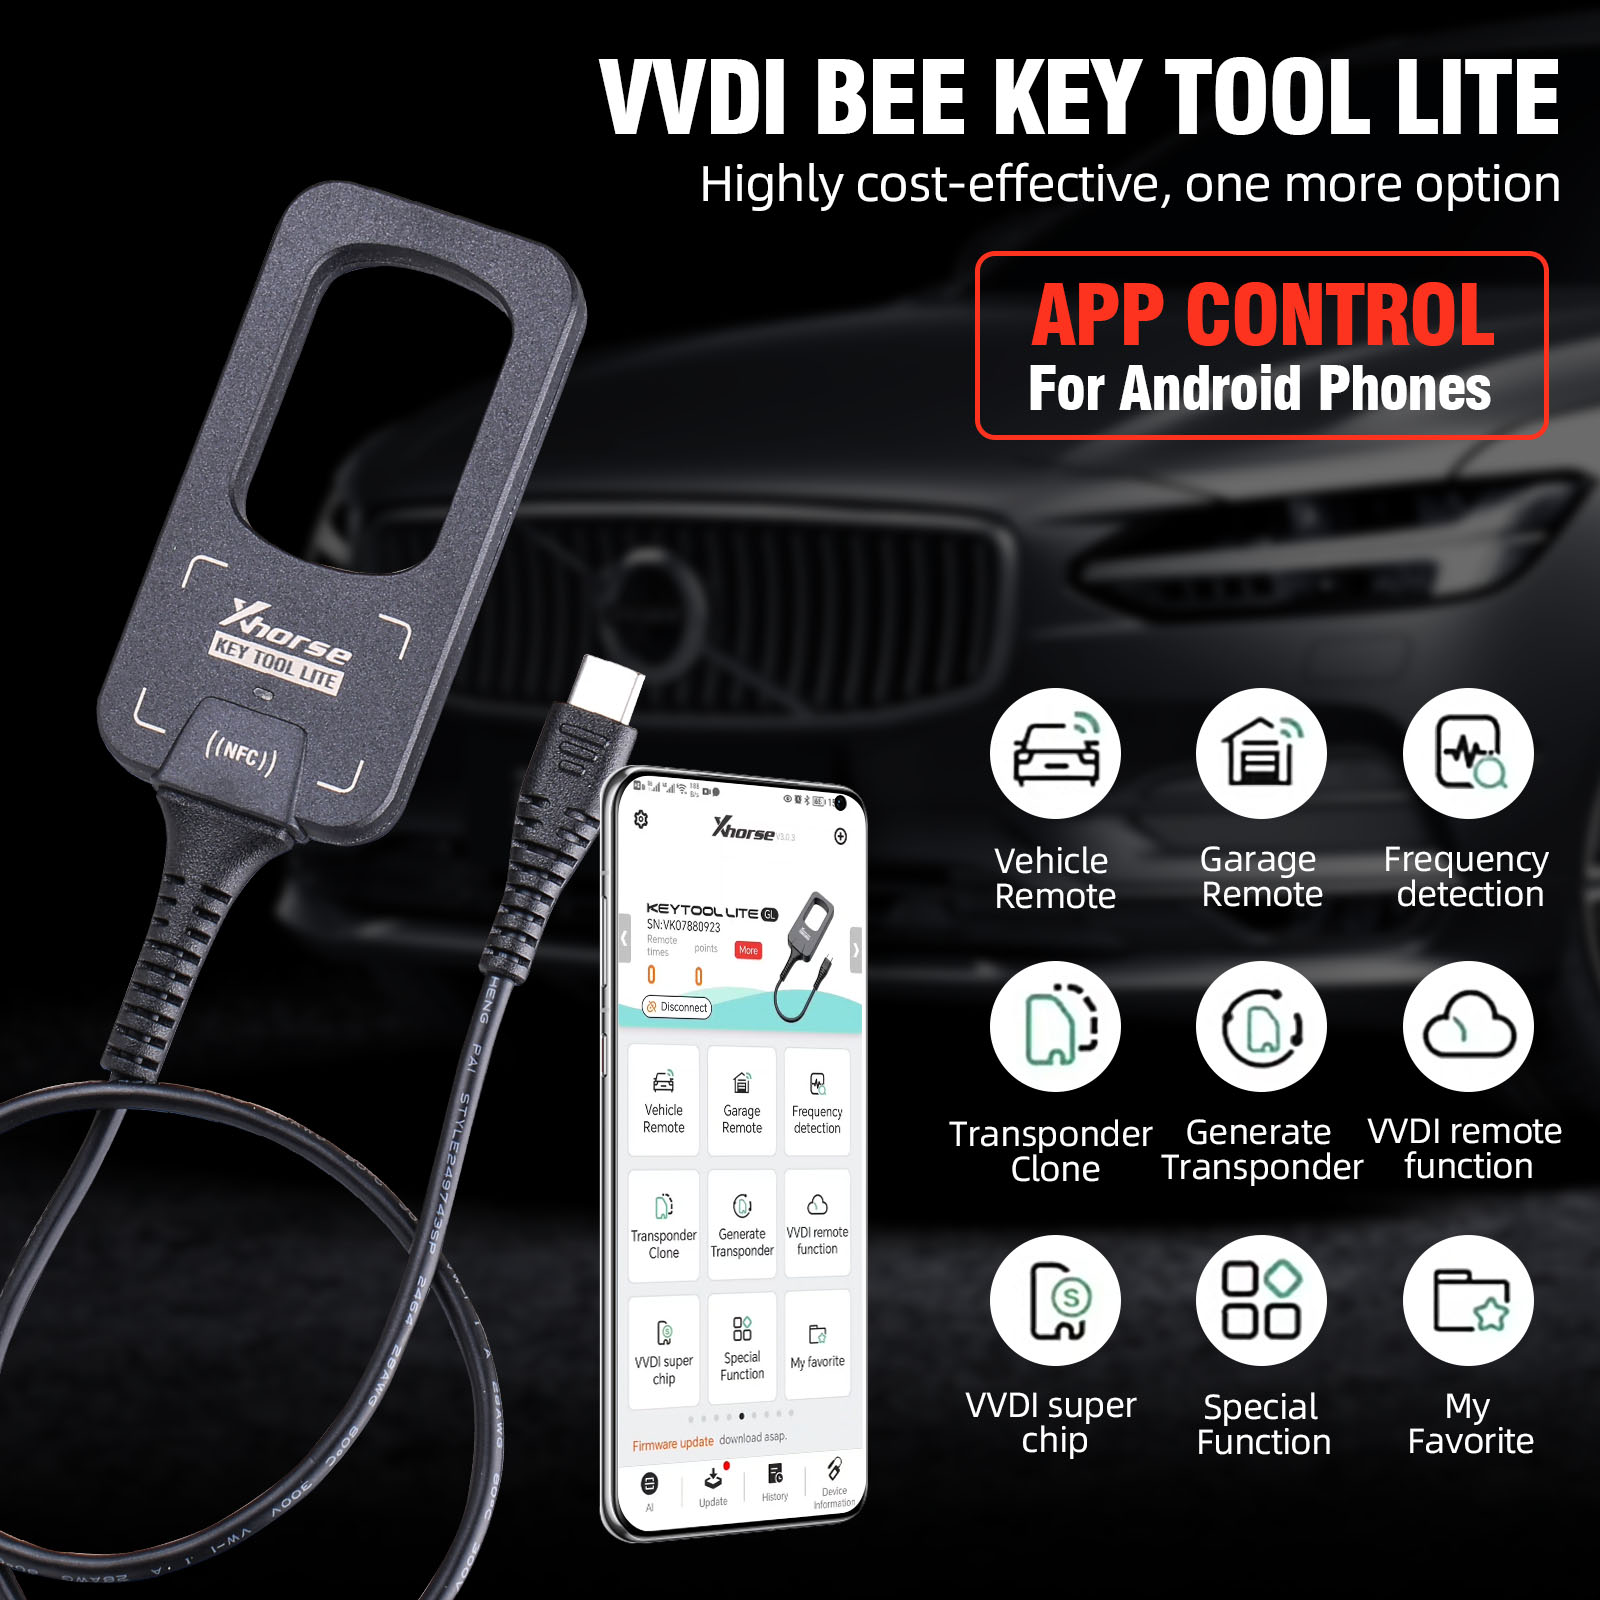 VVDI Bee Key Tool Lite